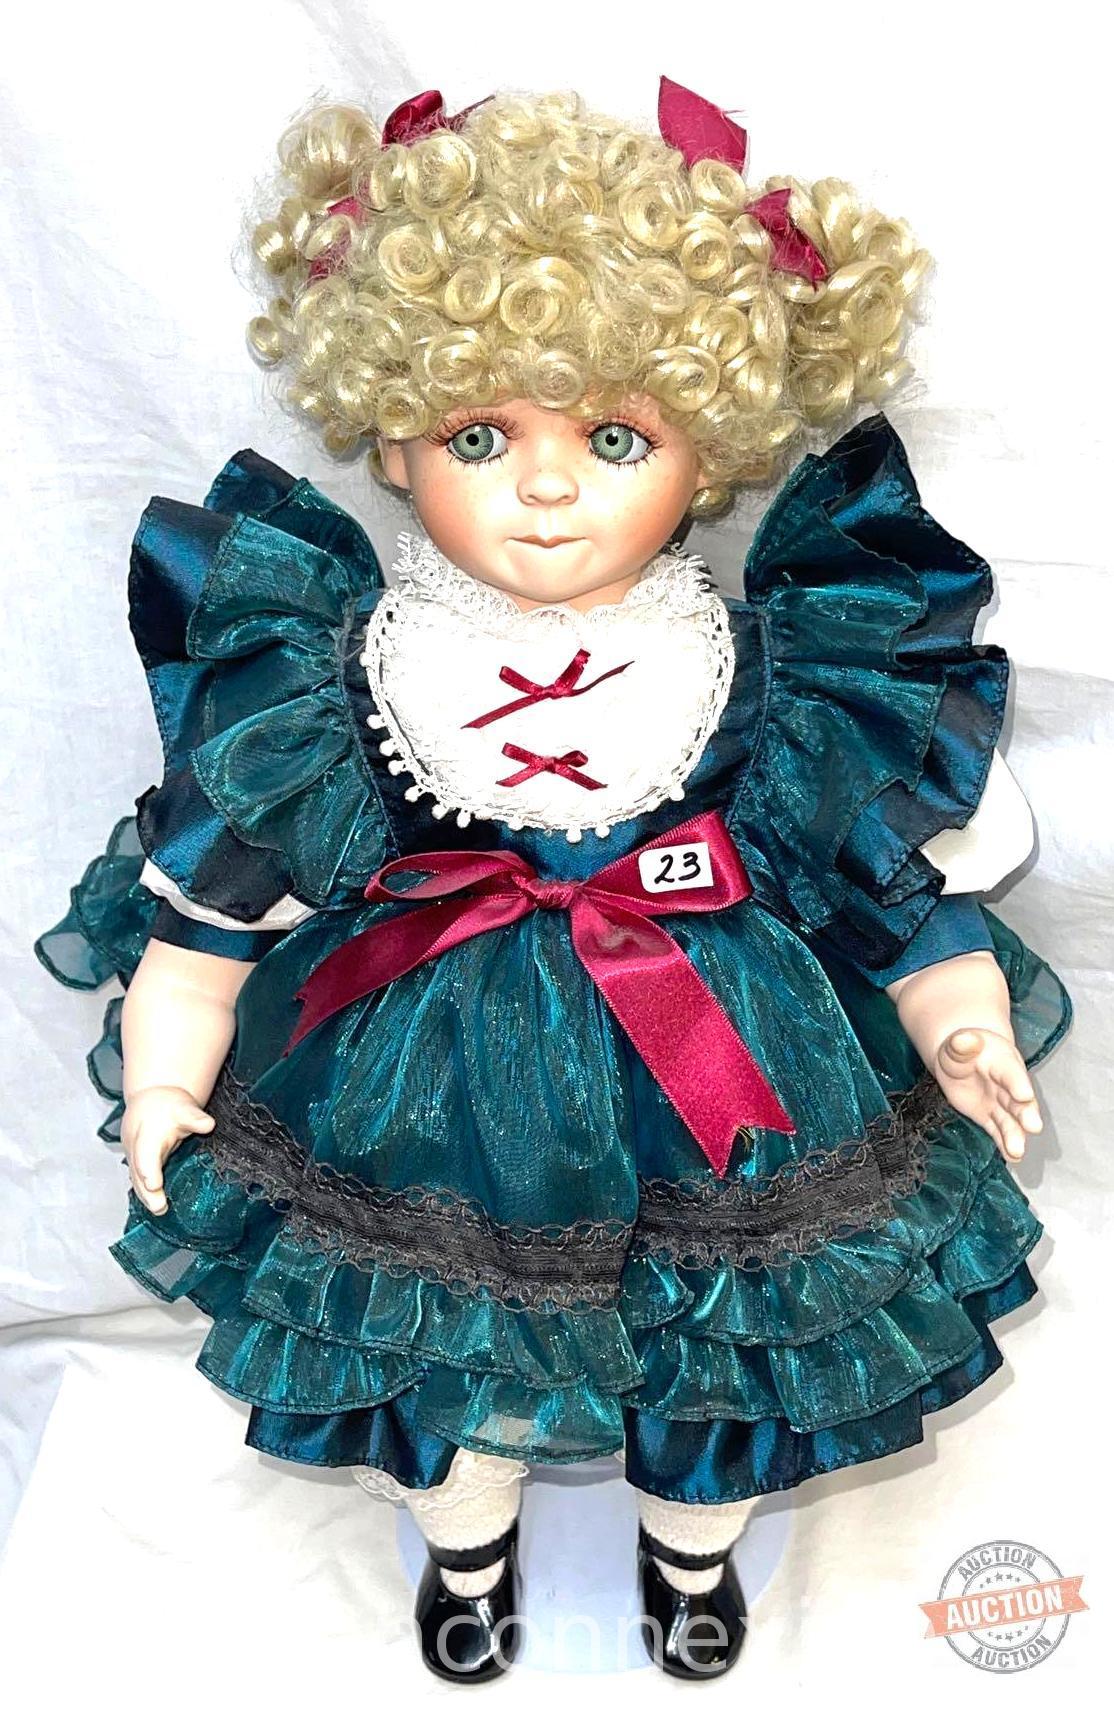 Doll - Porcelain Collector Doll, Seymour Mann, 20"h